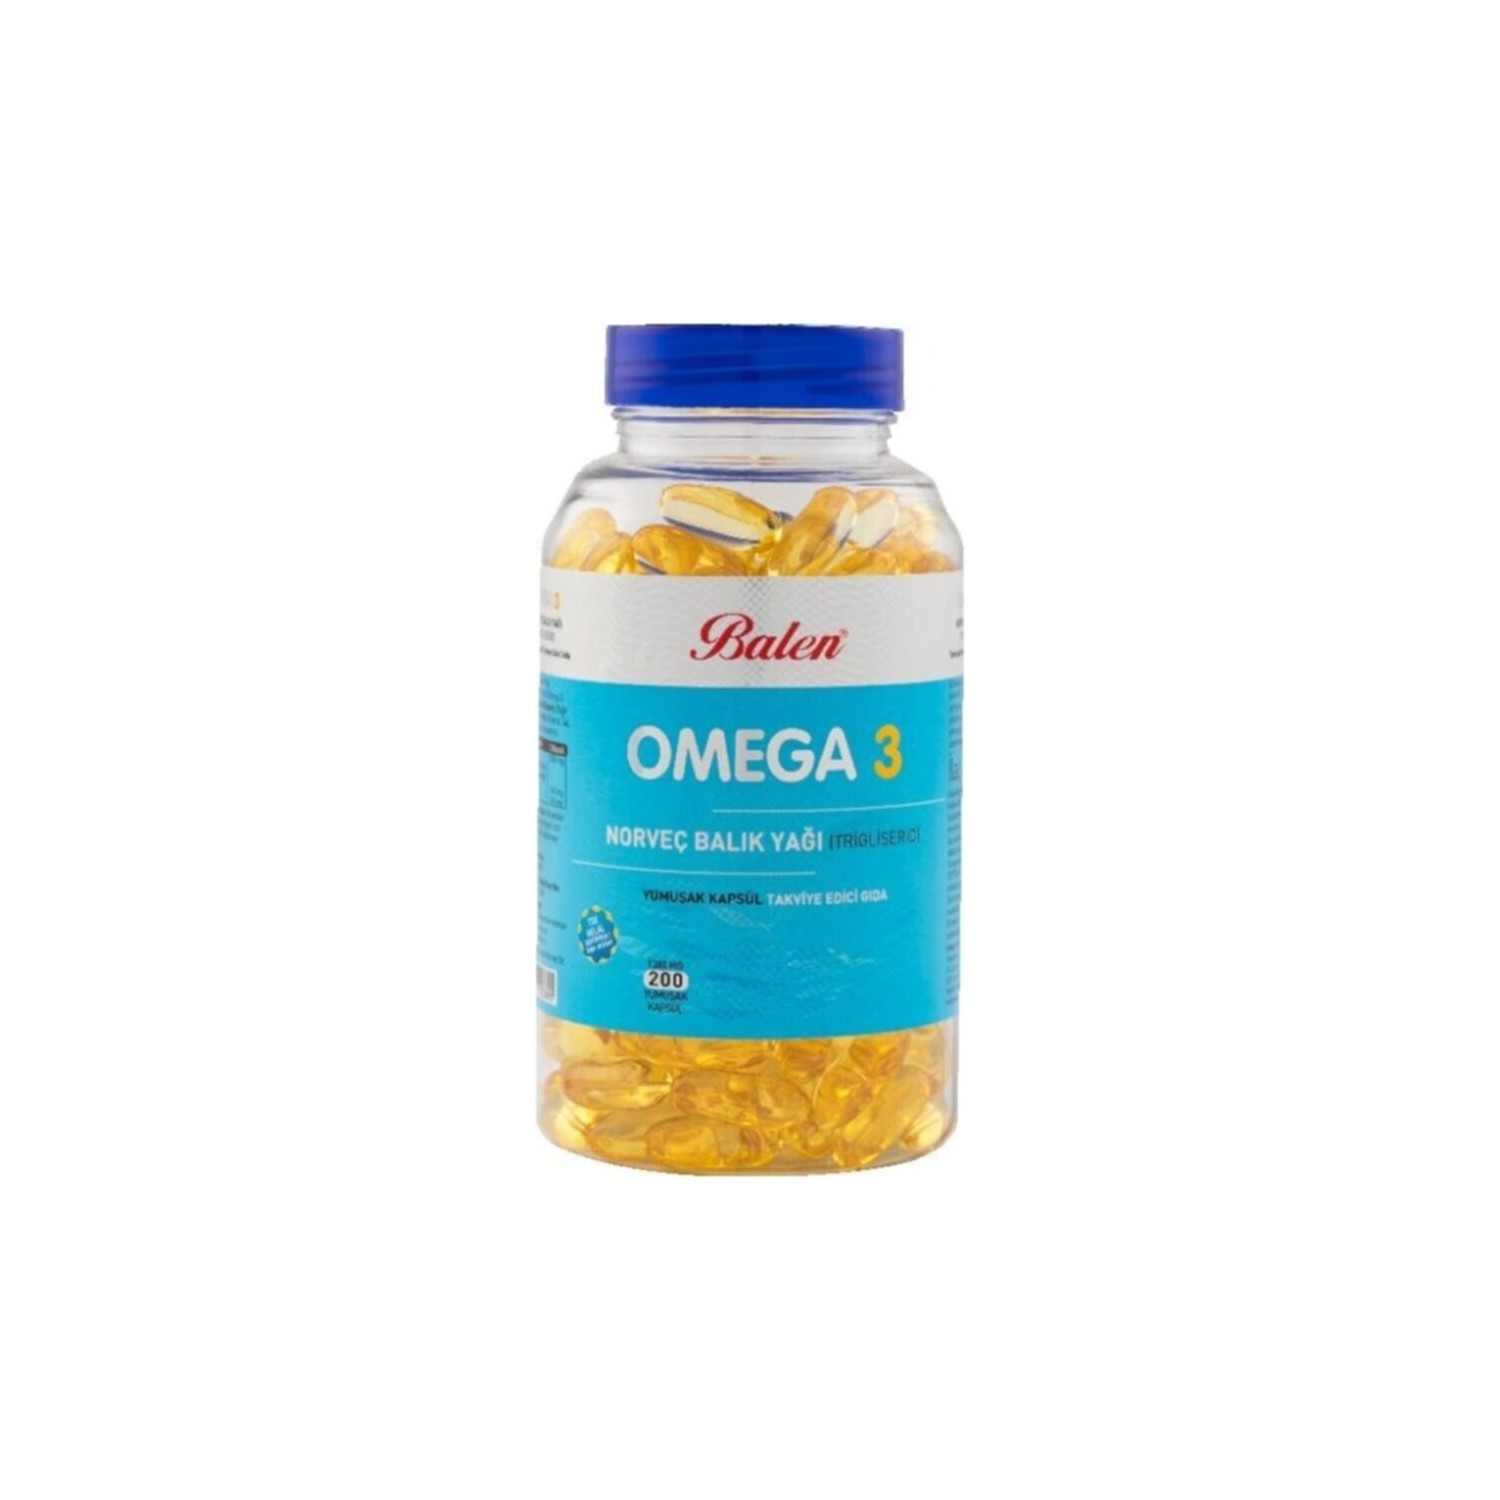 Рыбий жир Balen Omega 3, 200 капсул, 1380 мг норвежский рыбий жир balen omega 3 триглицерид 1380 мг 200 капсул